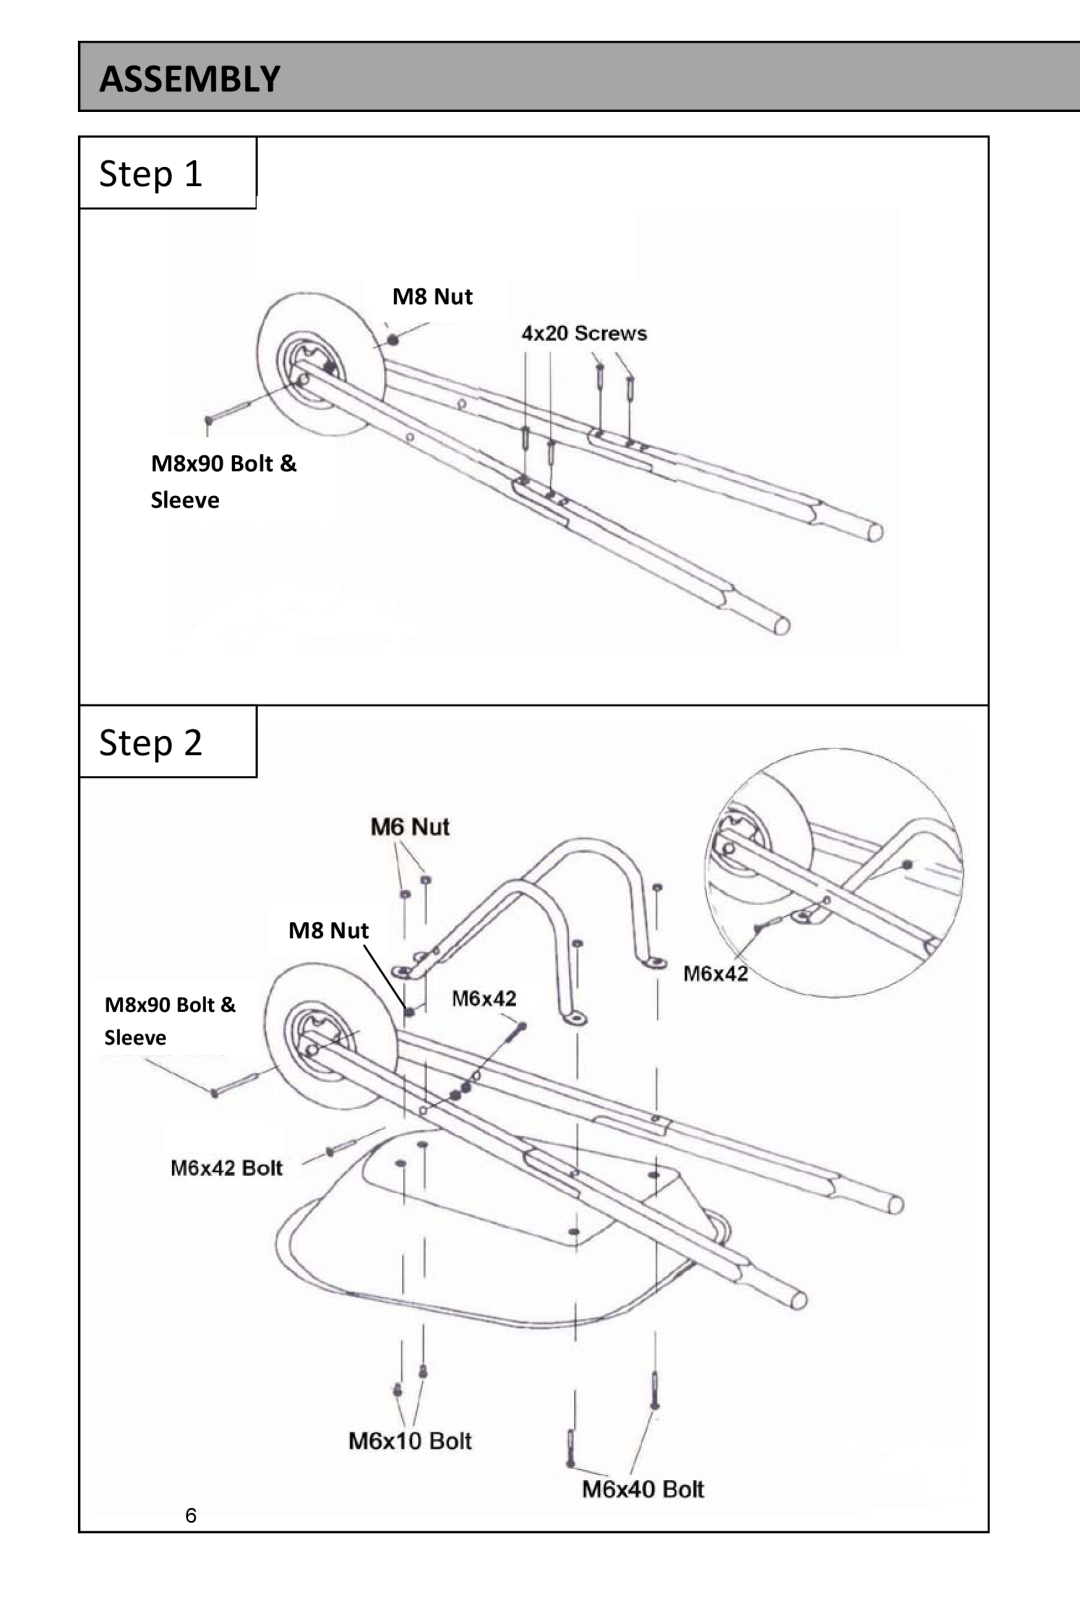 Kettler 8411-182 manual Assembly, M8 Nut M8x90 Bolt Sleeve, Step 